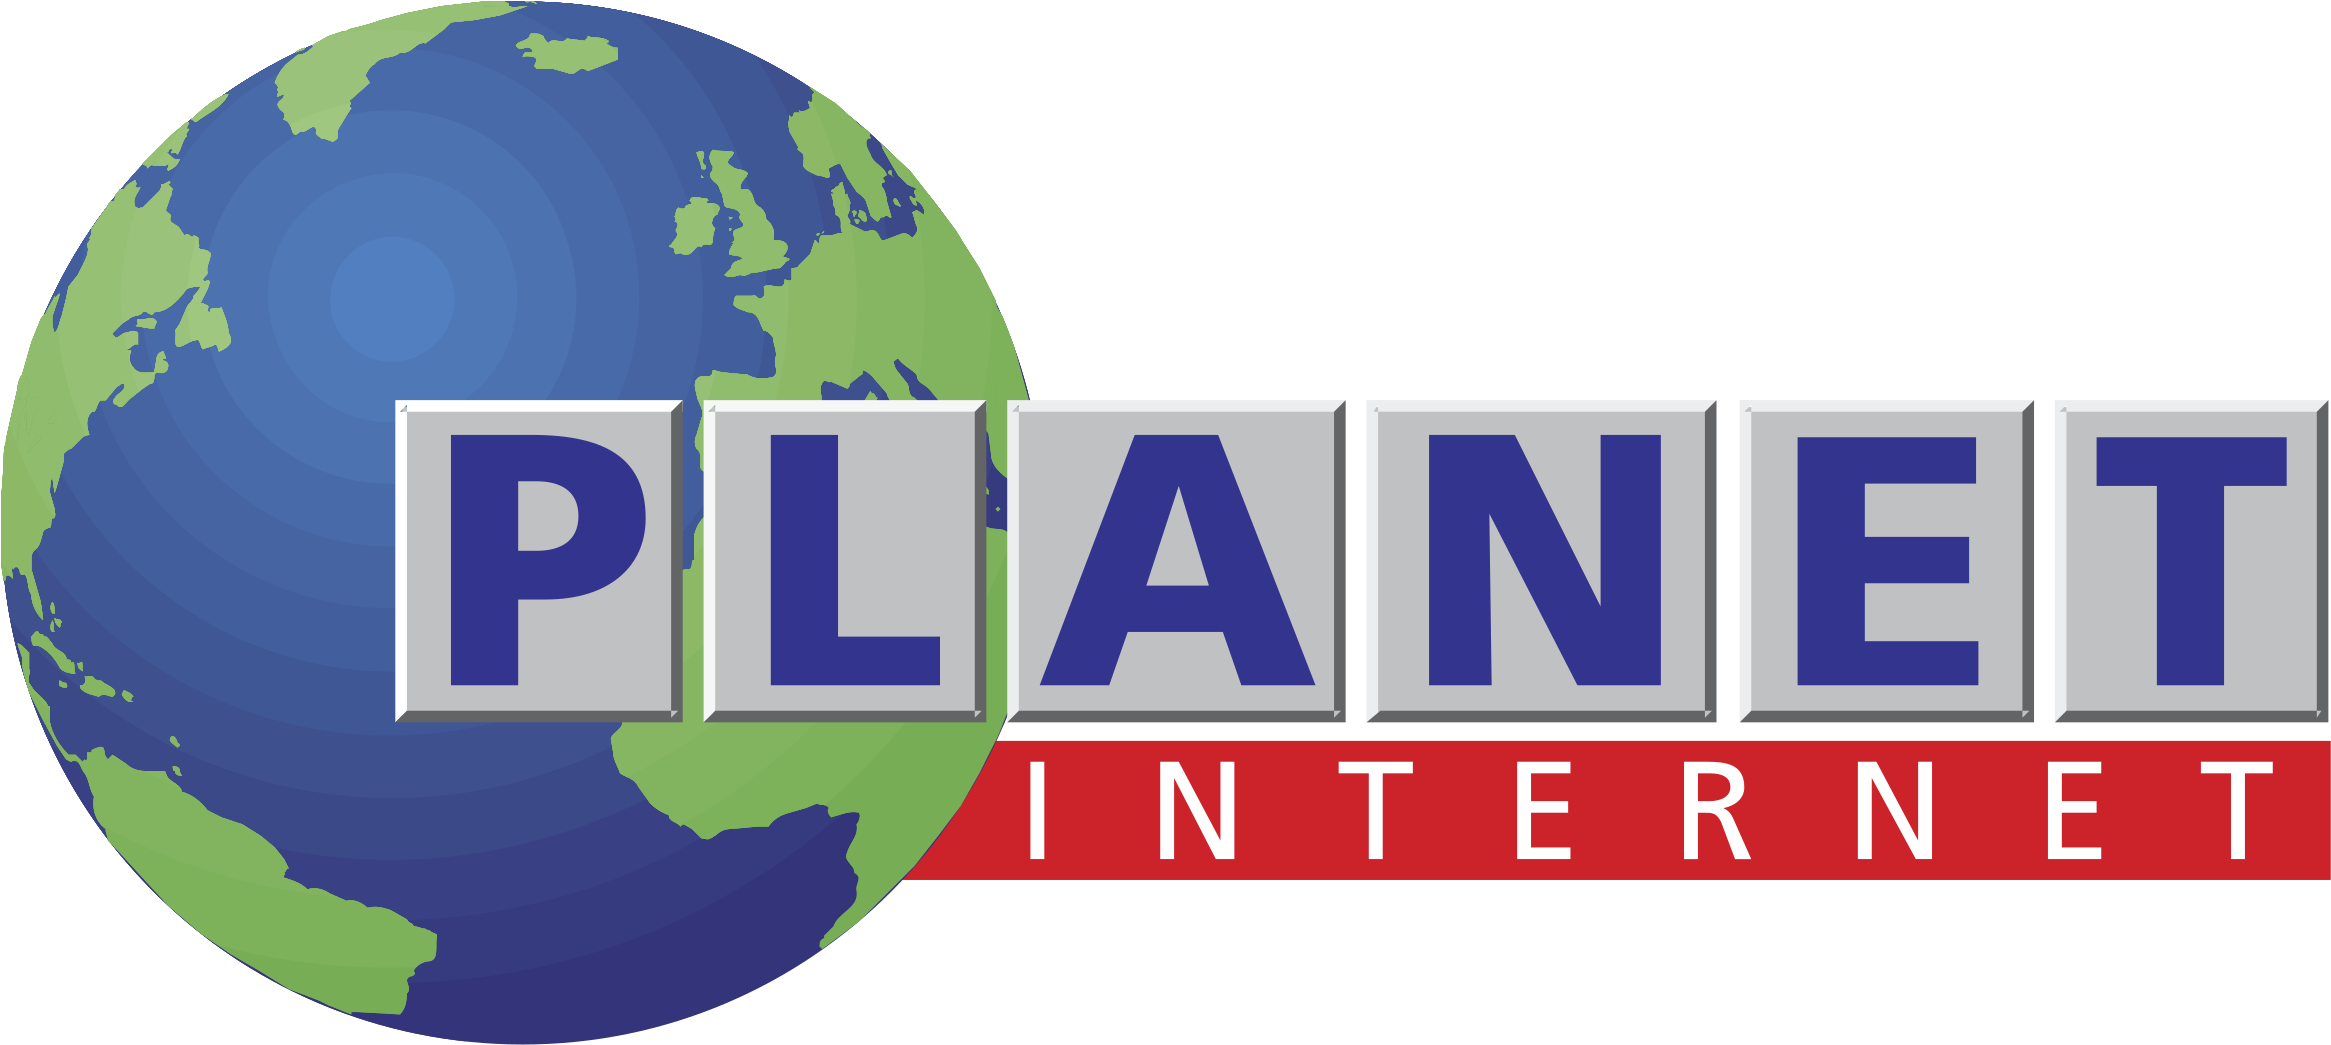 Planet Internet Logo Png Transparent - Planet Internet (2400x2400), Png Download